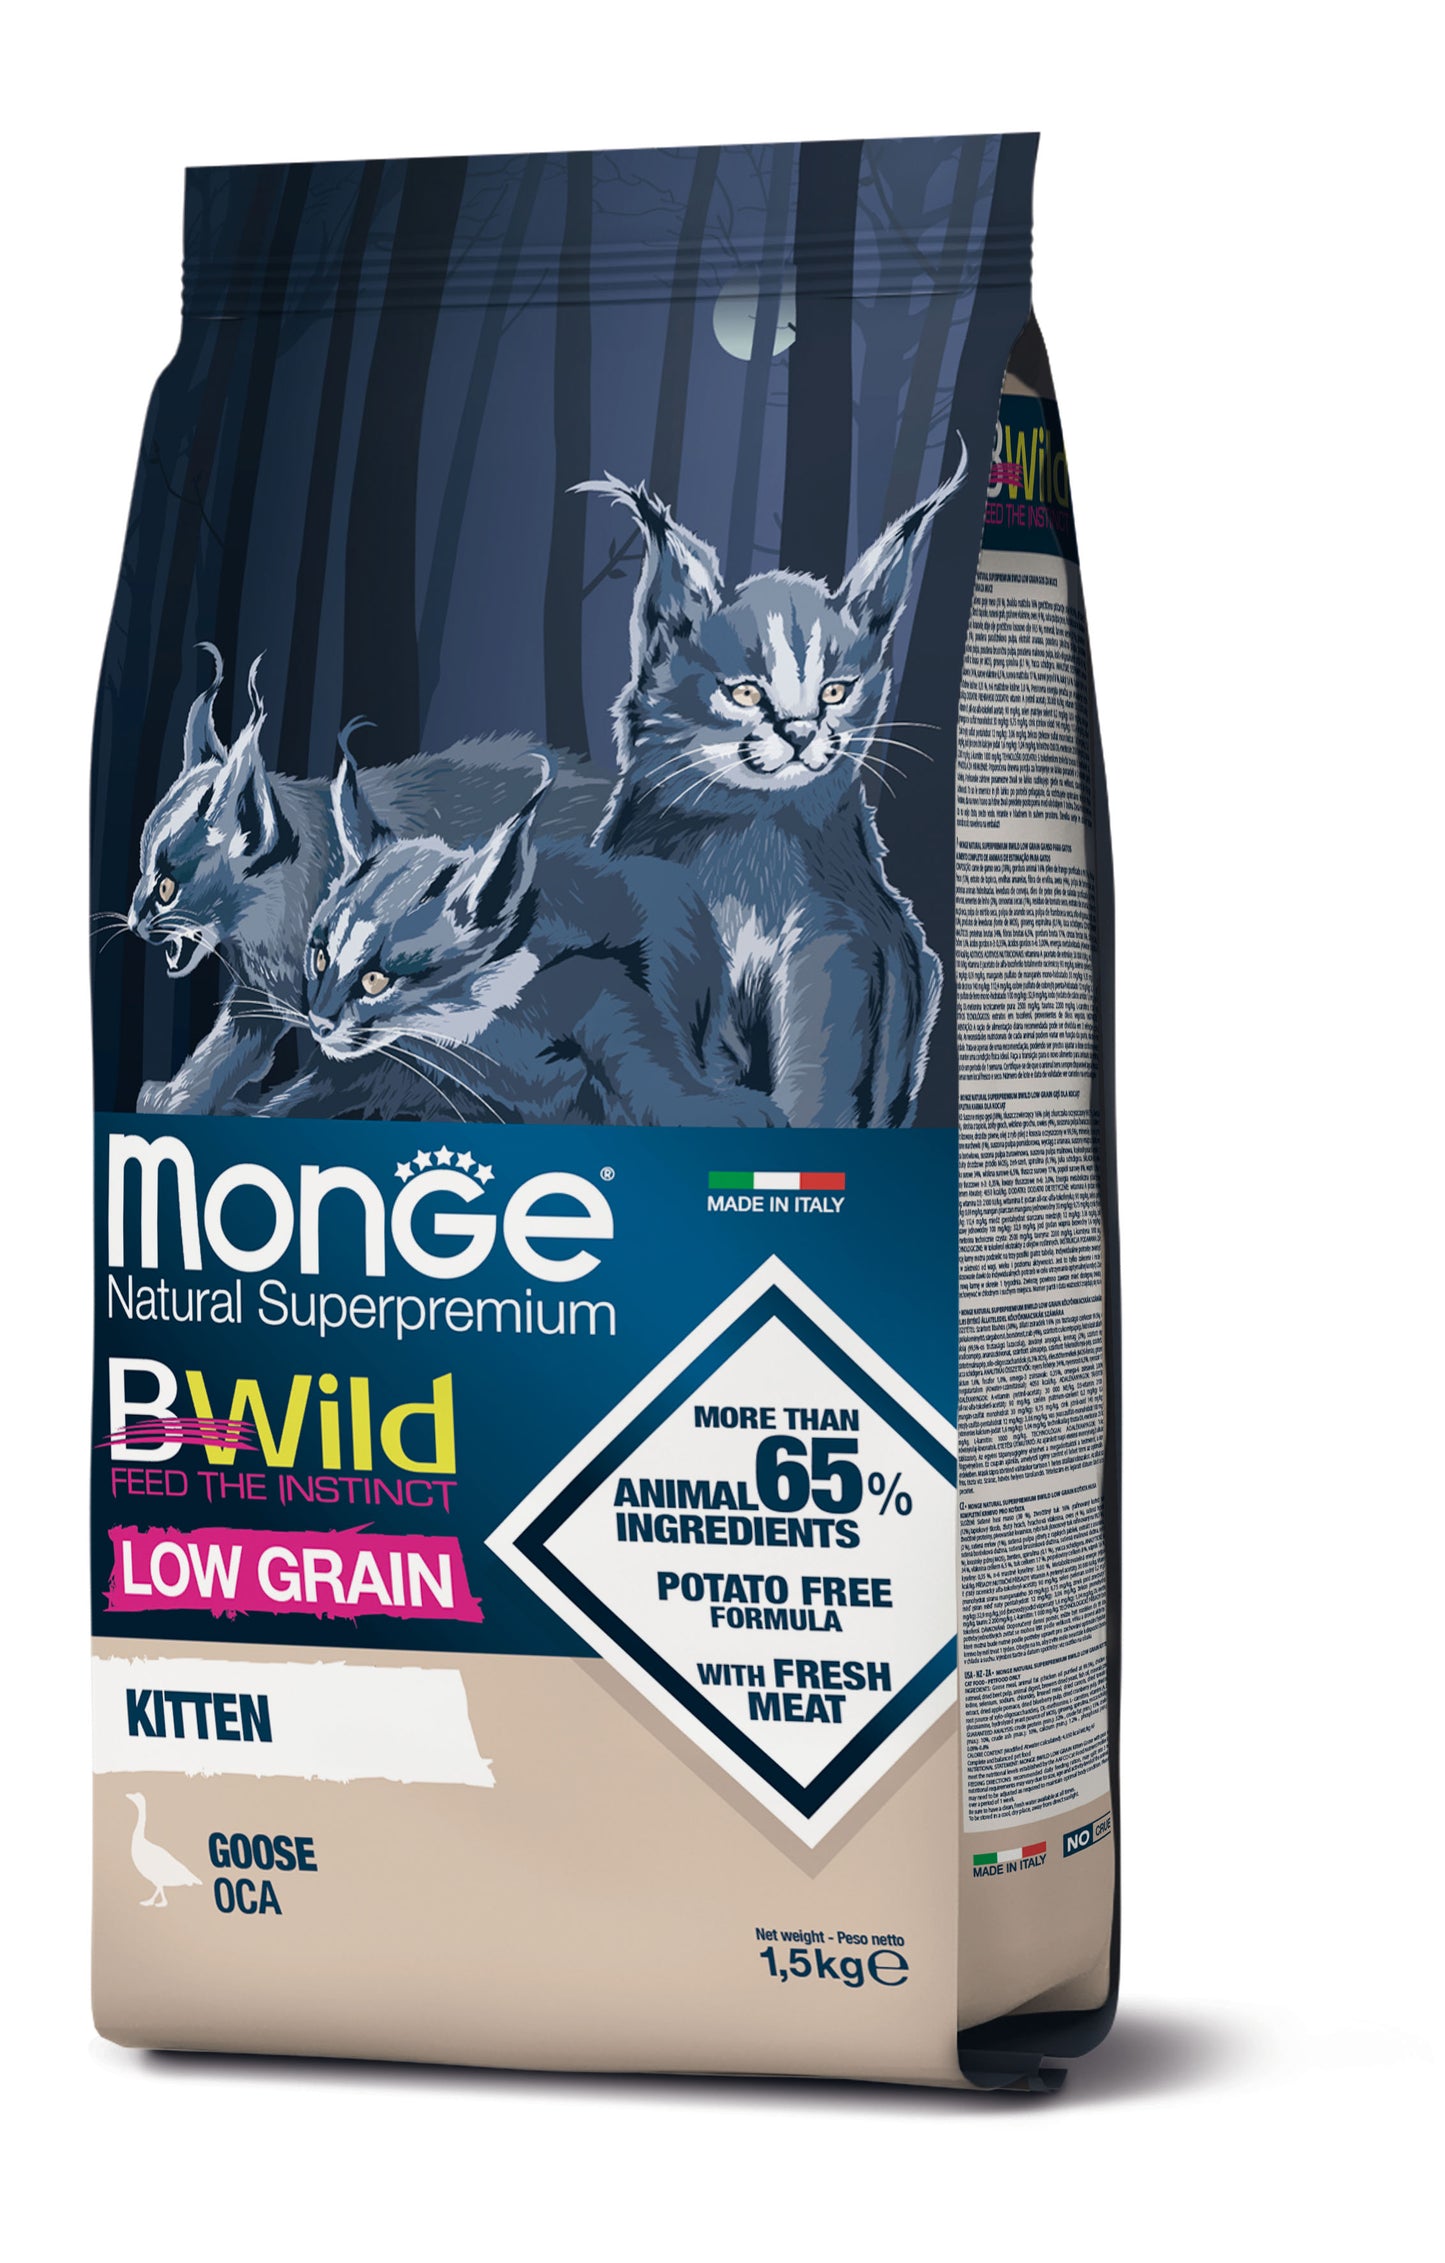 Monge Cat - BWild - LOW GRAIN - Kitten Goose